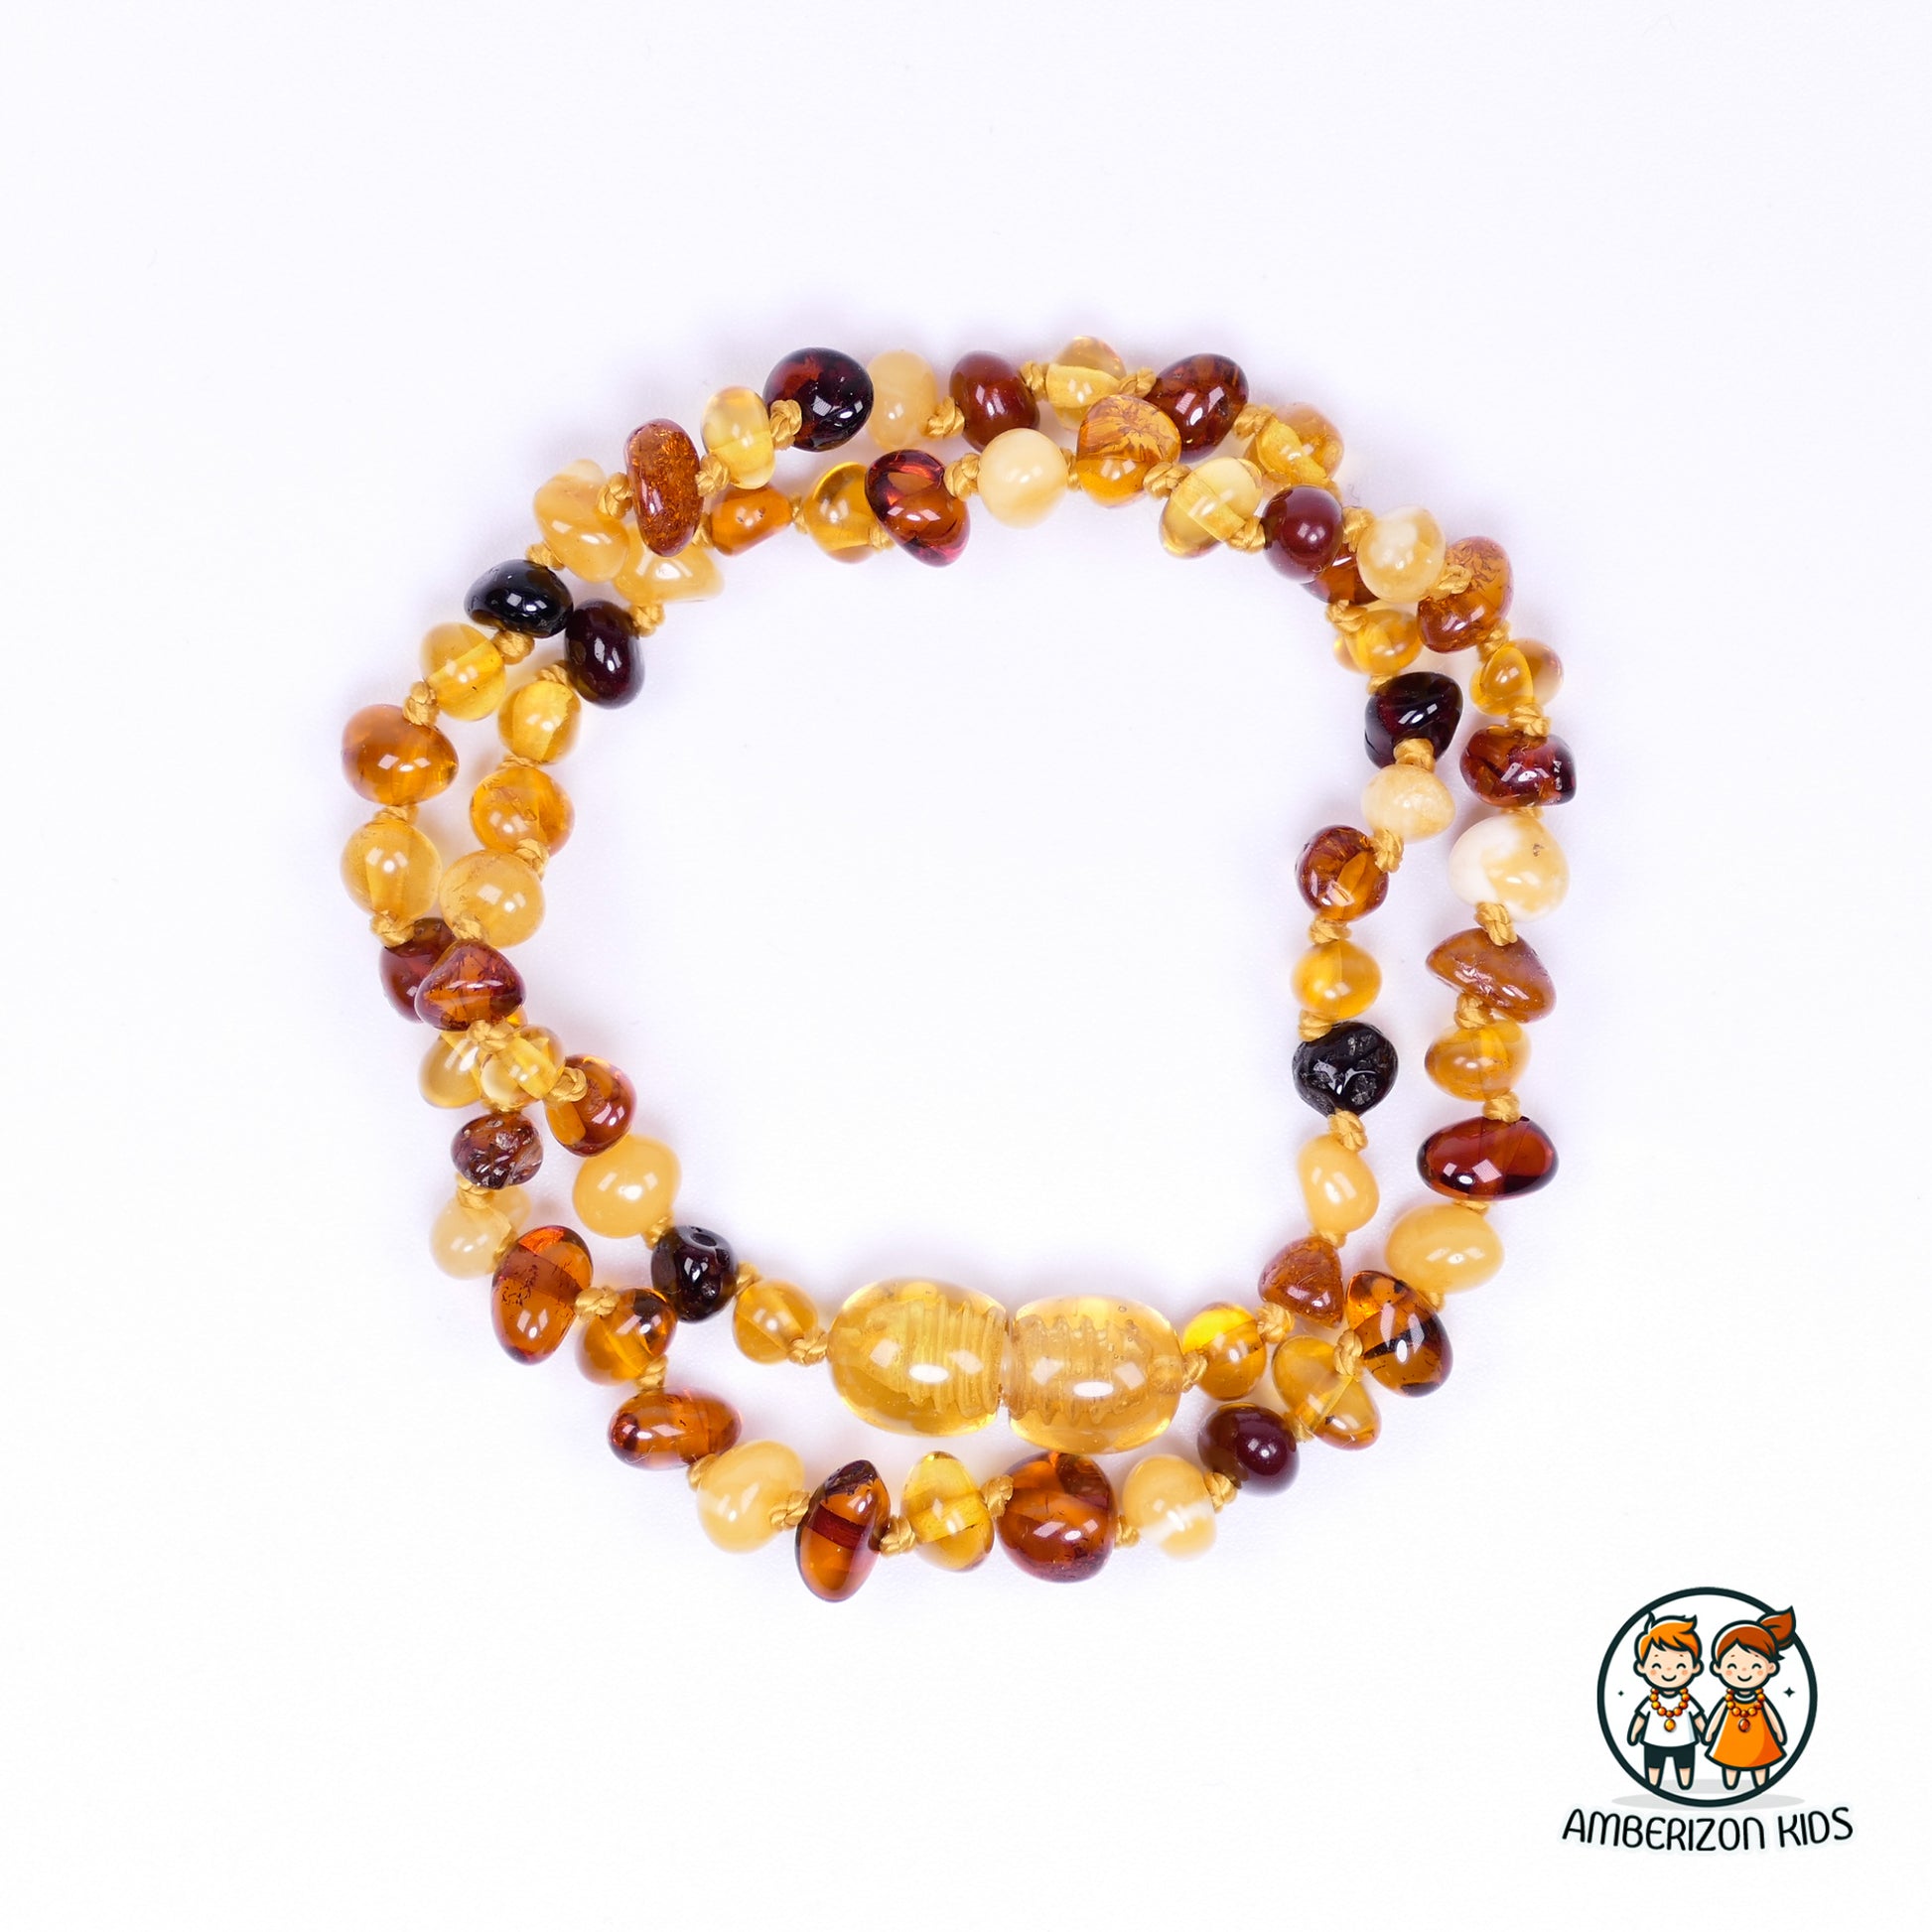 Multicolored polished amber stone baby necklace - Unisex - Smooth beads